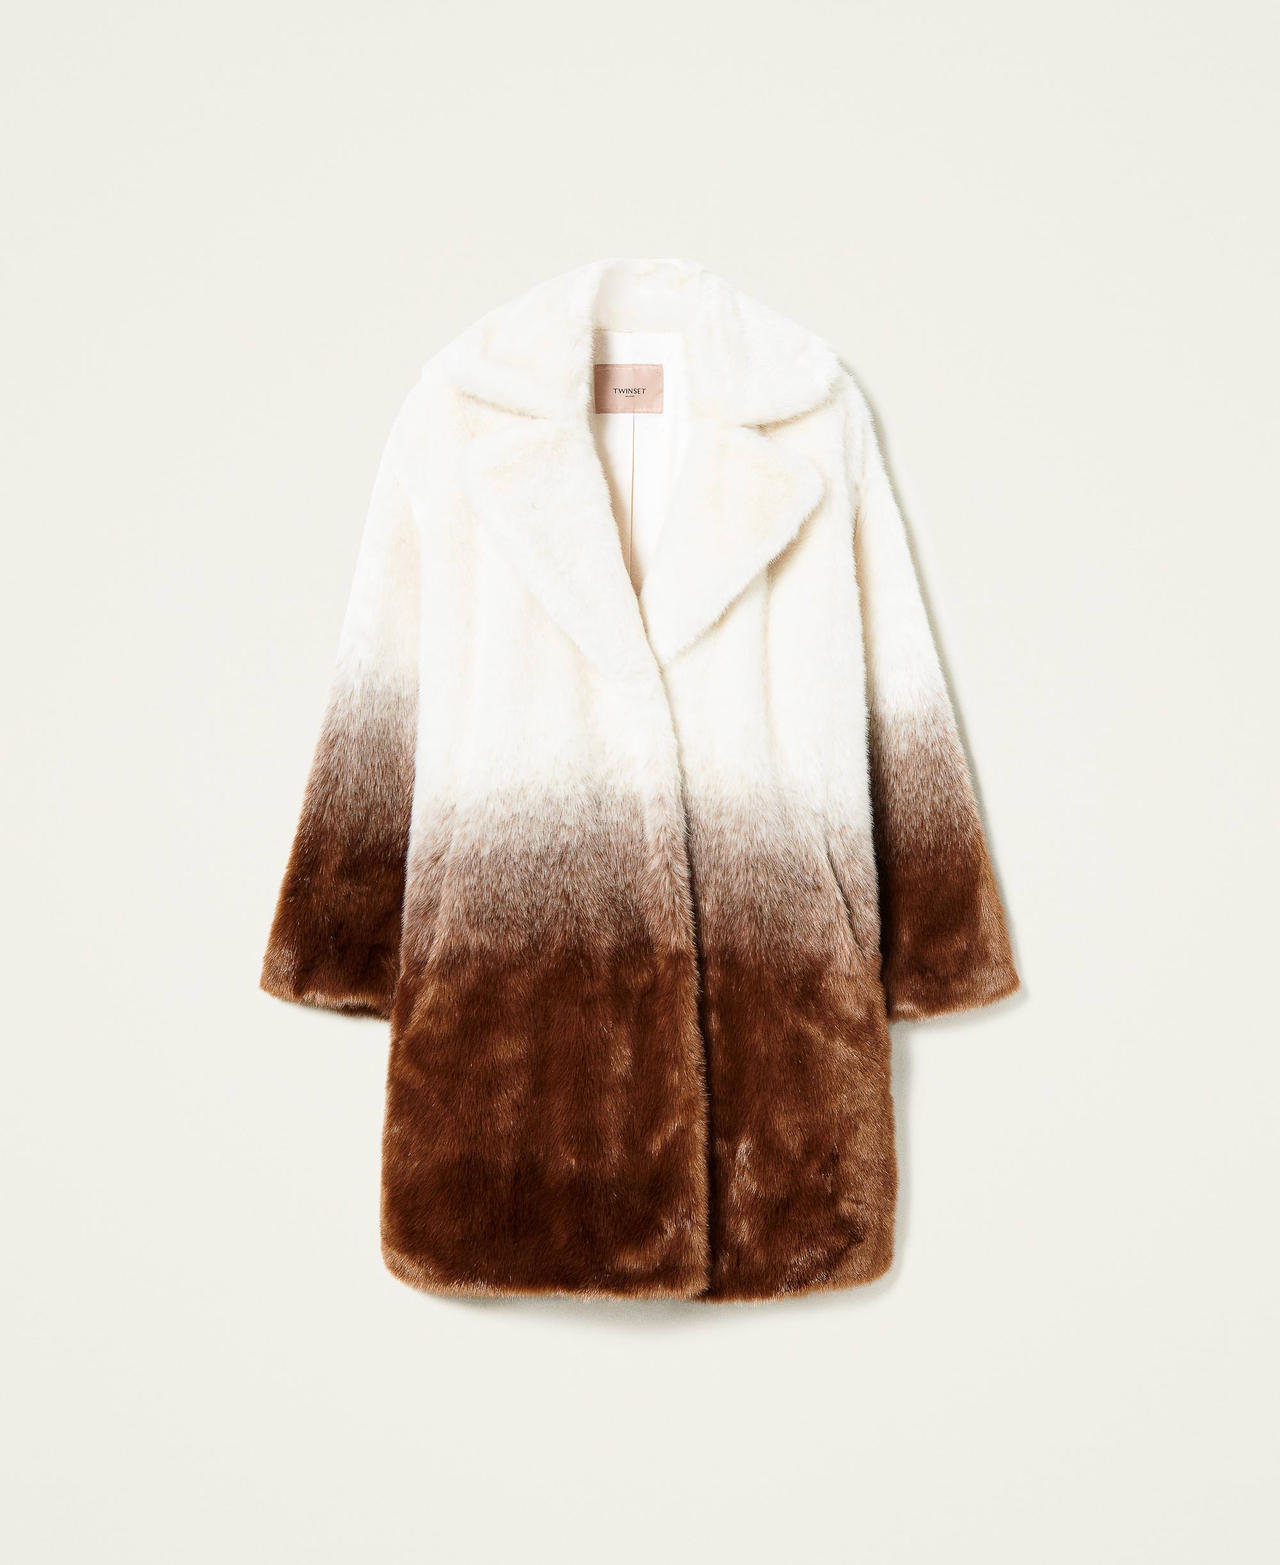 Manteau en tissu dégradé Dégradé Neige / Beige « Golden Rock » Femme 212TT2440-0S